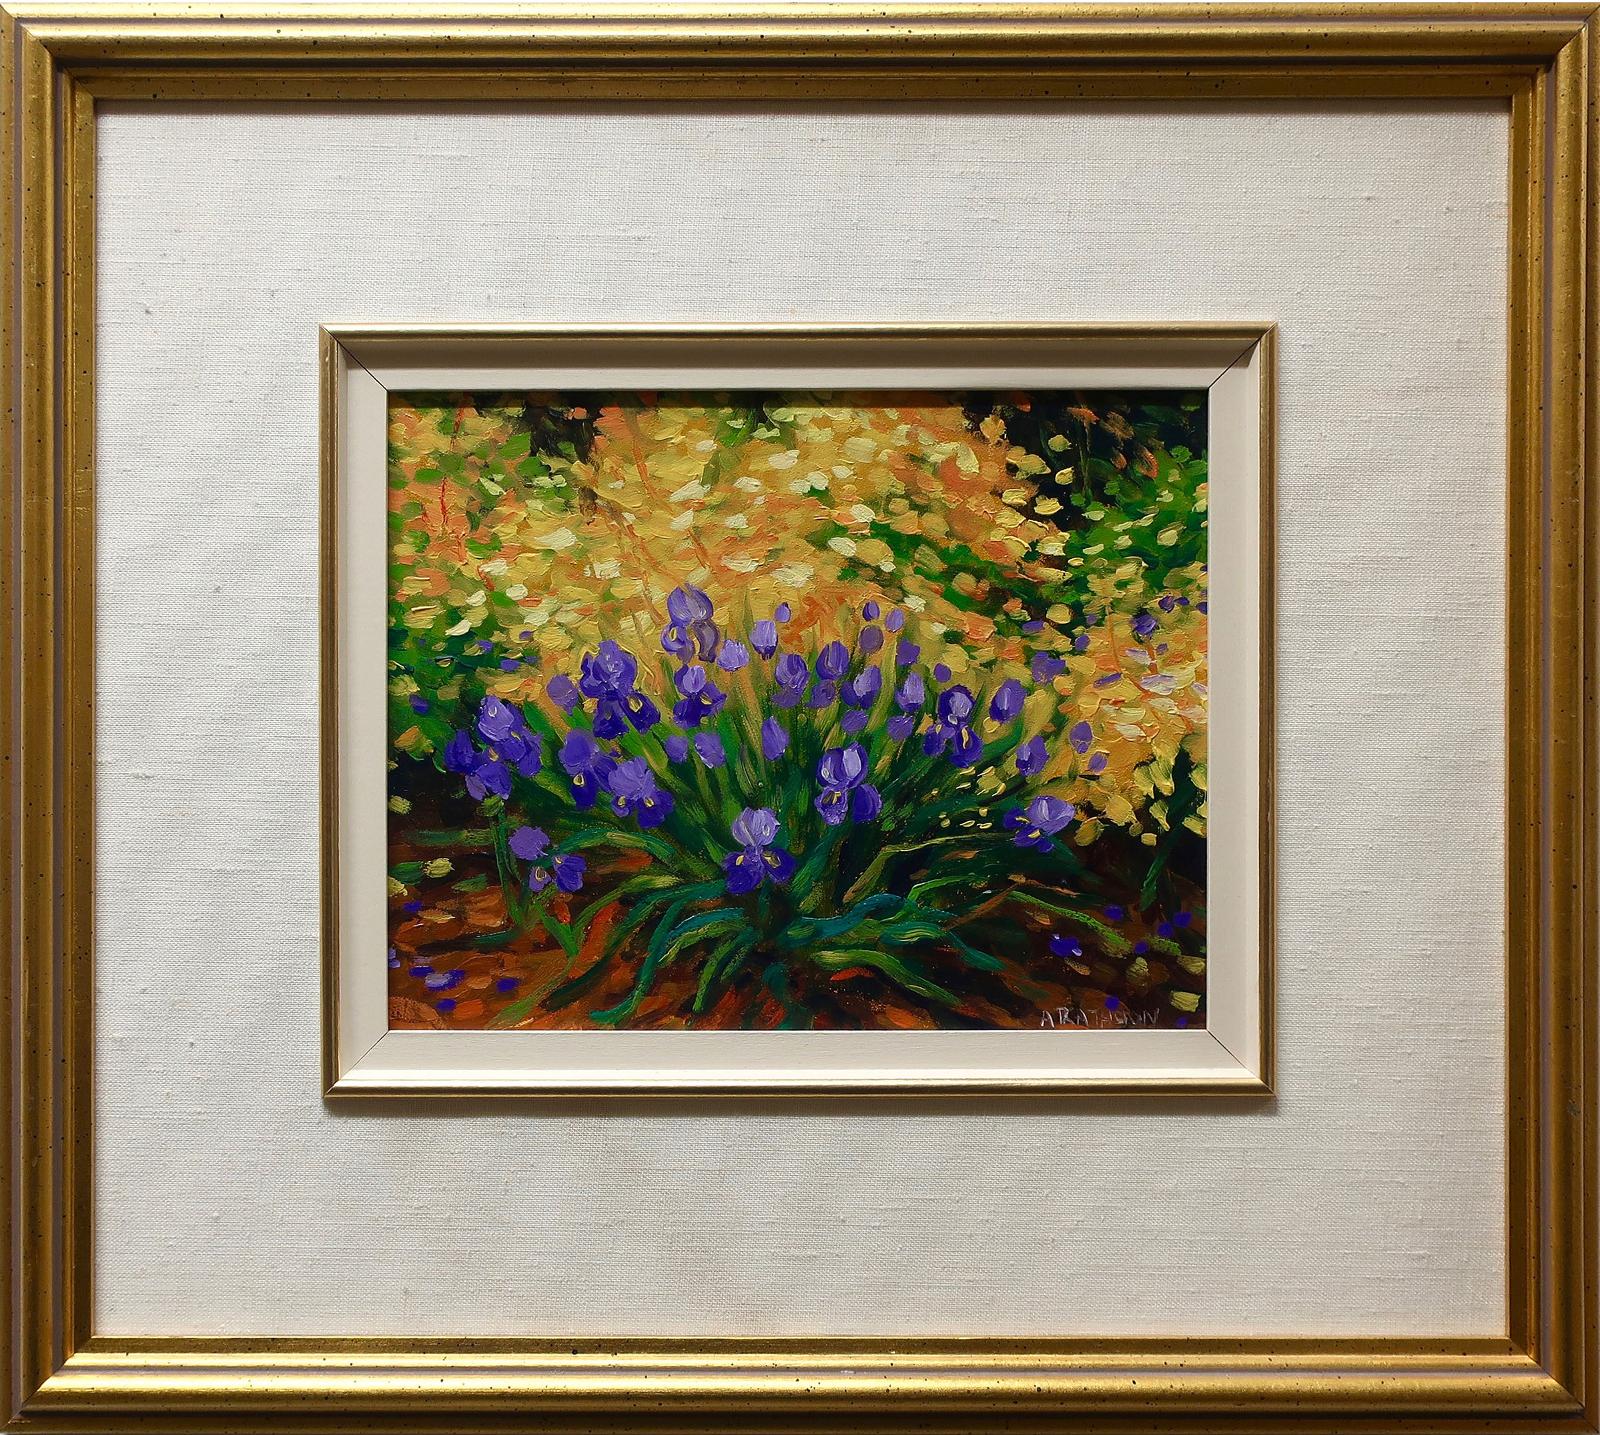 David Arathoon (1959) - Irises In Spring